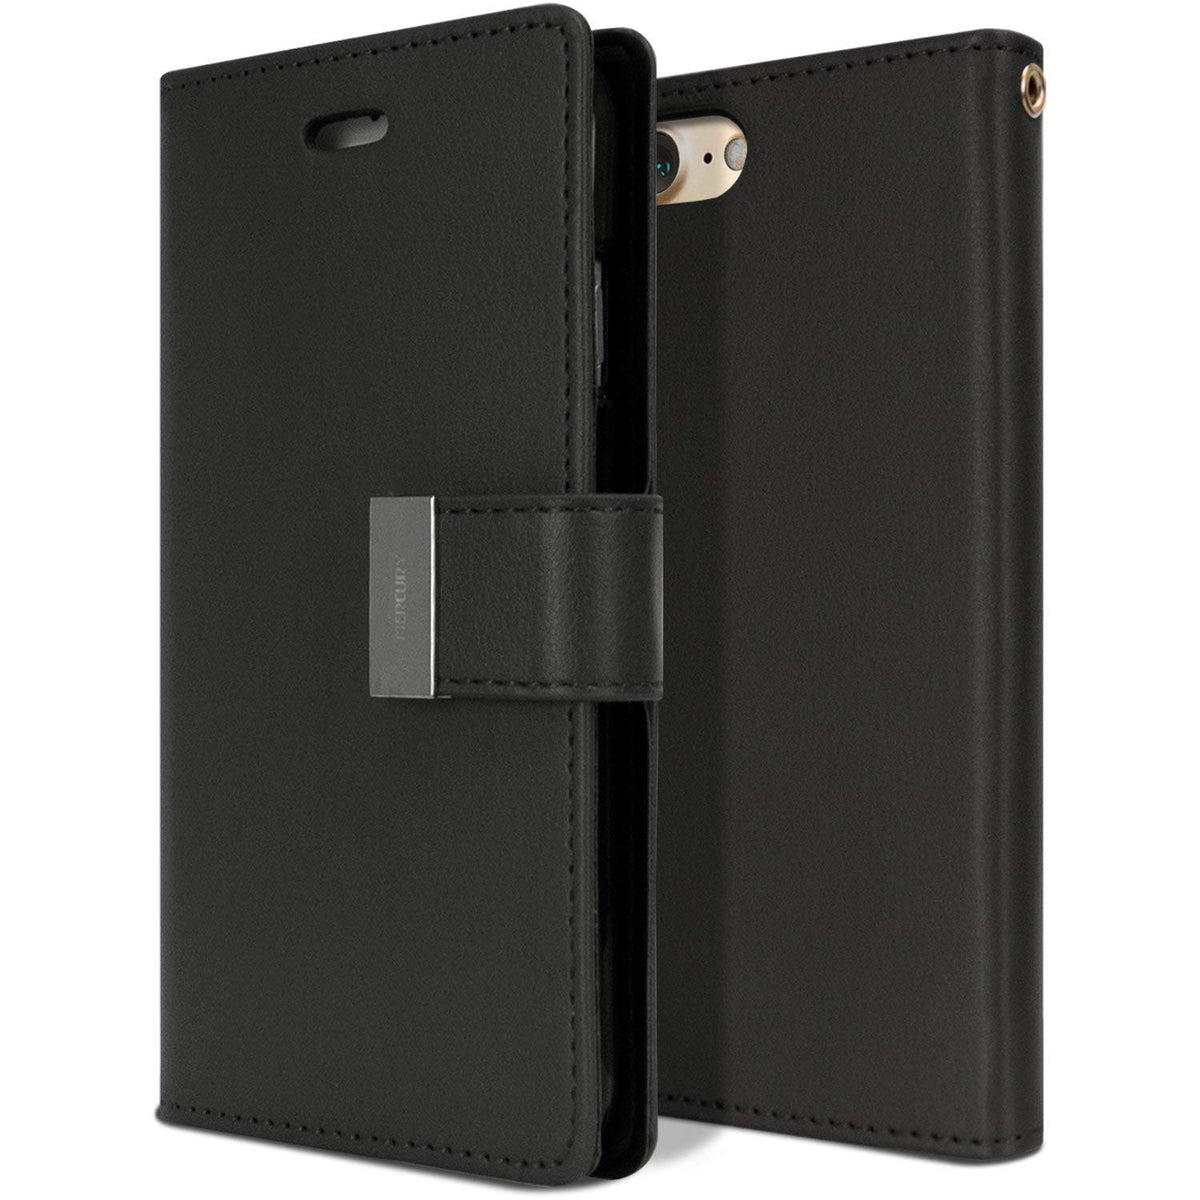 Iphone 7 / 8 / SE Wallet Flip Case with Card Slots Black